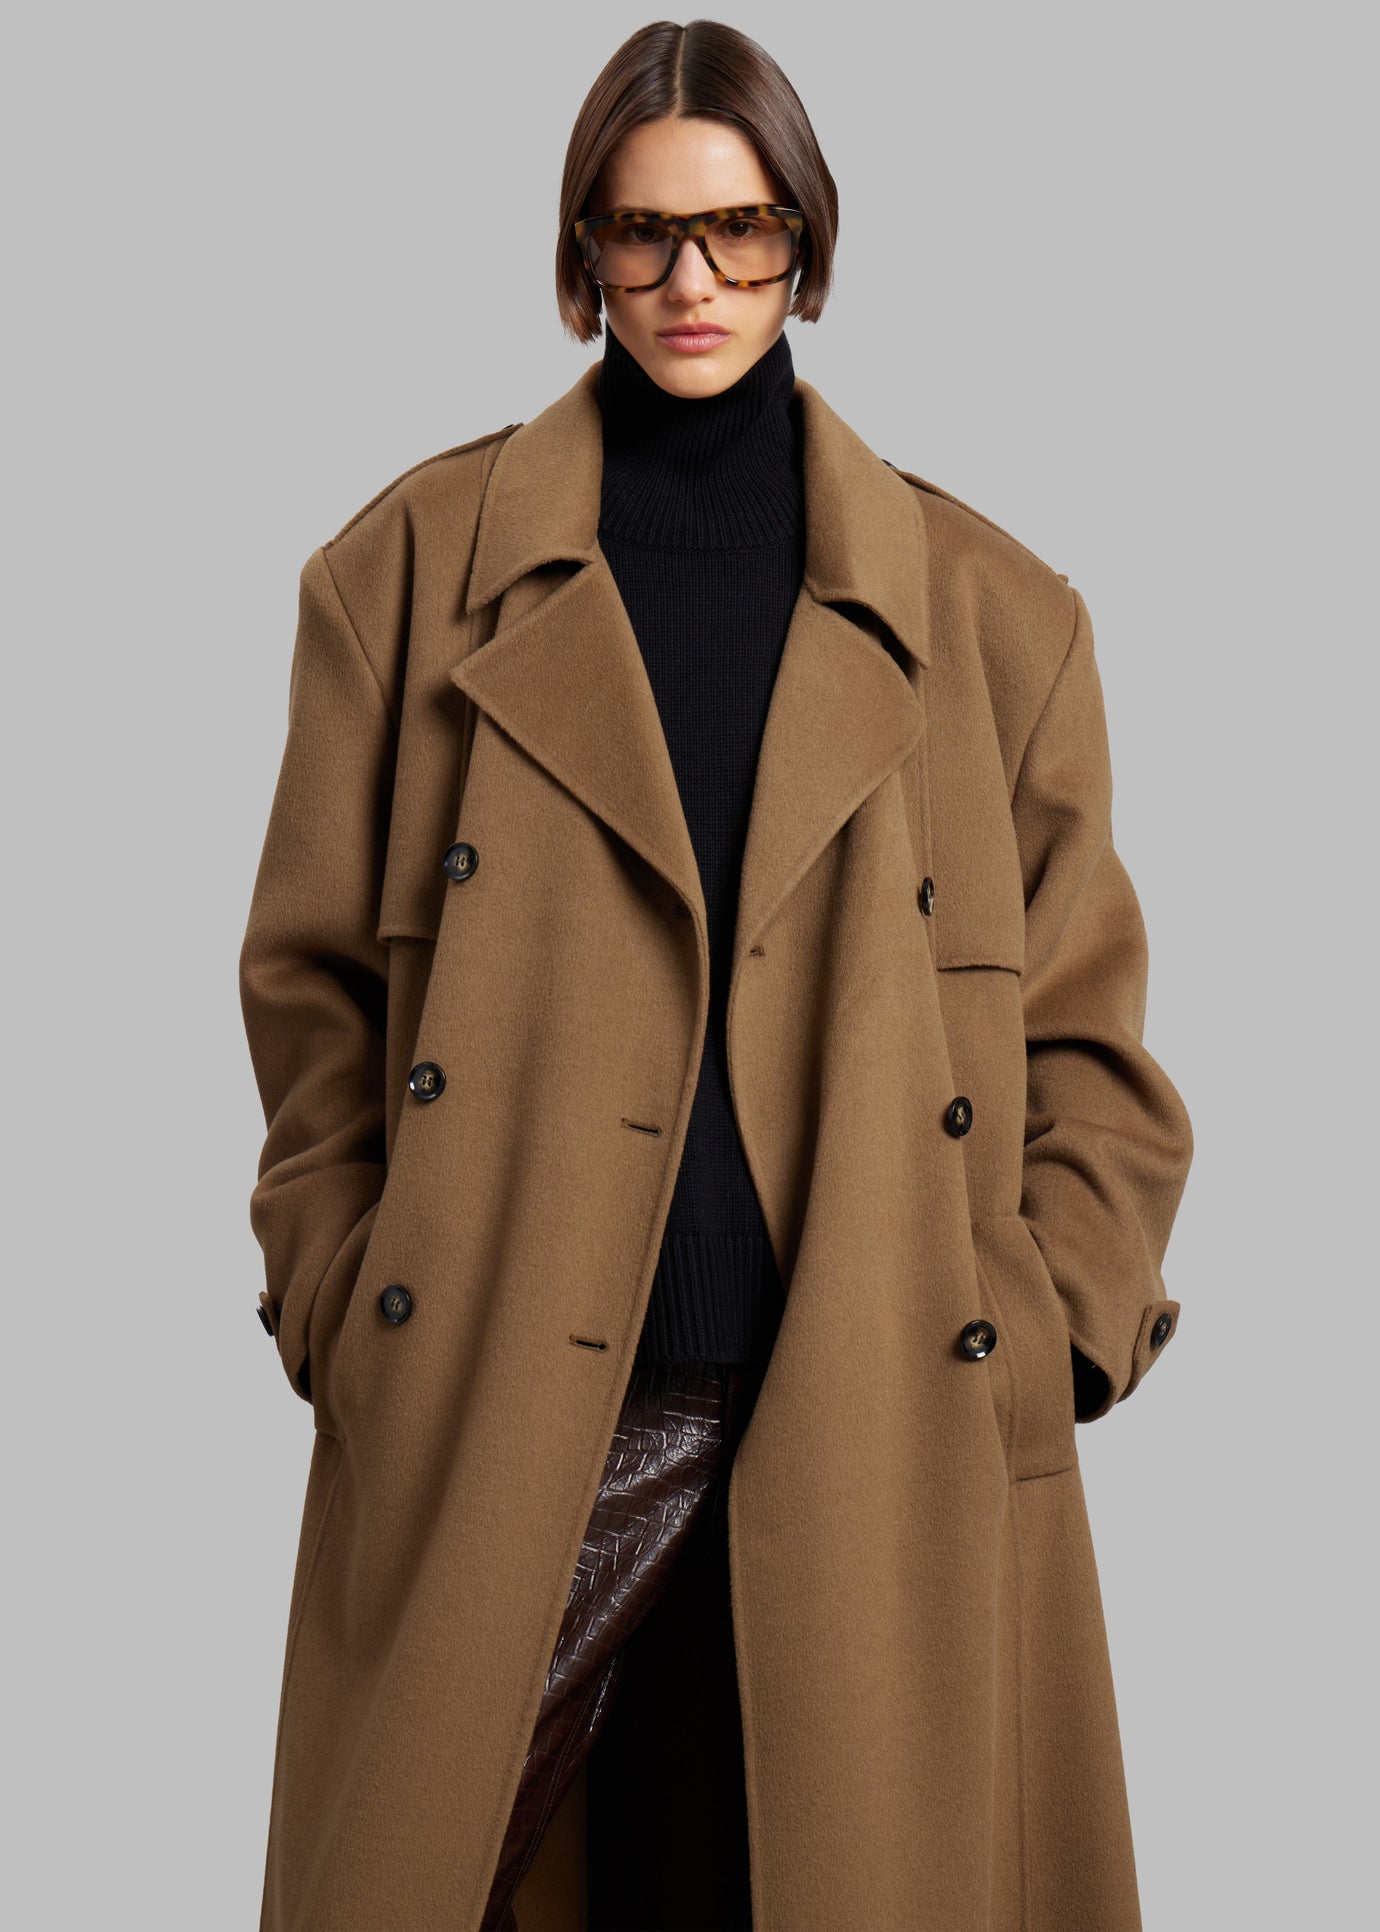 – Frankie Page Women\'s Blazer Coats, Jackets, The Trench & 2 Shop –